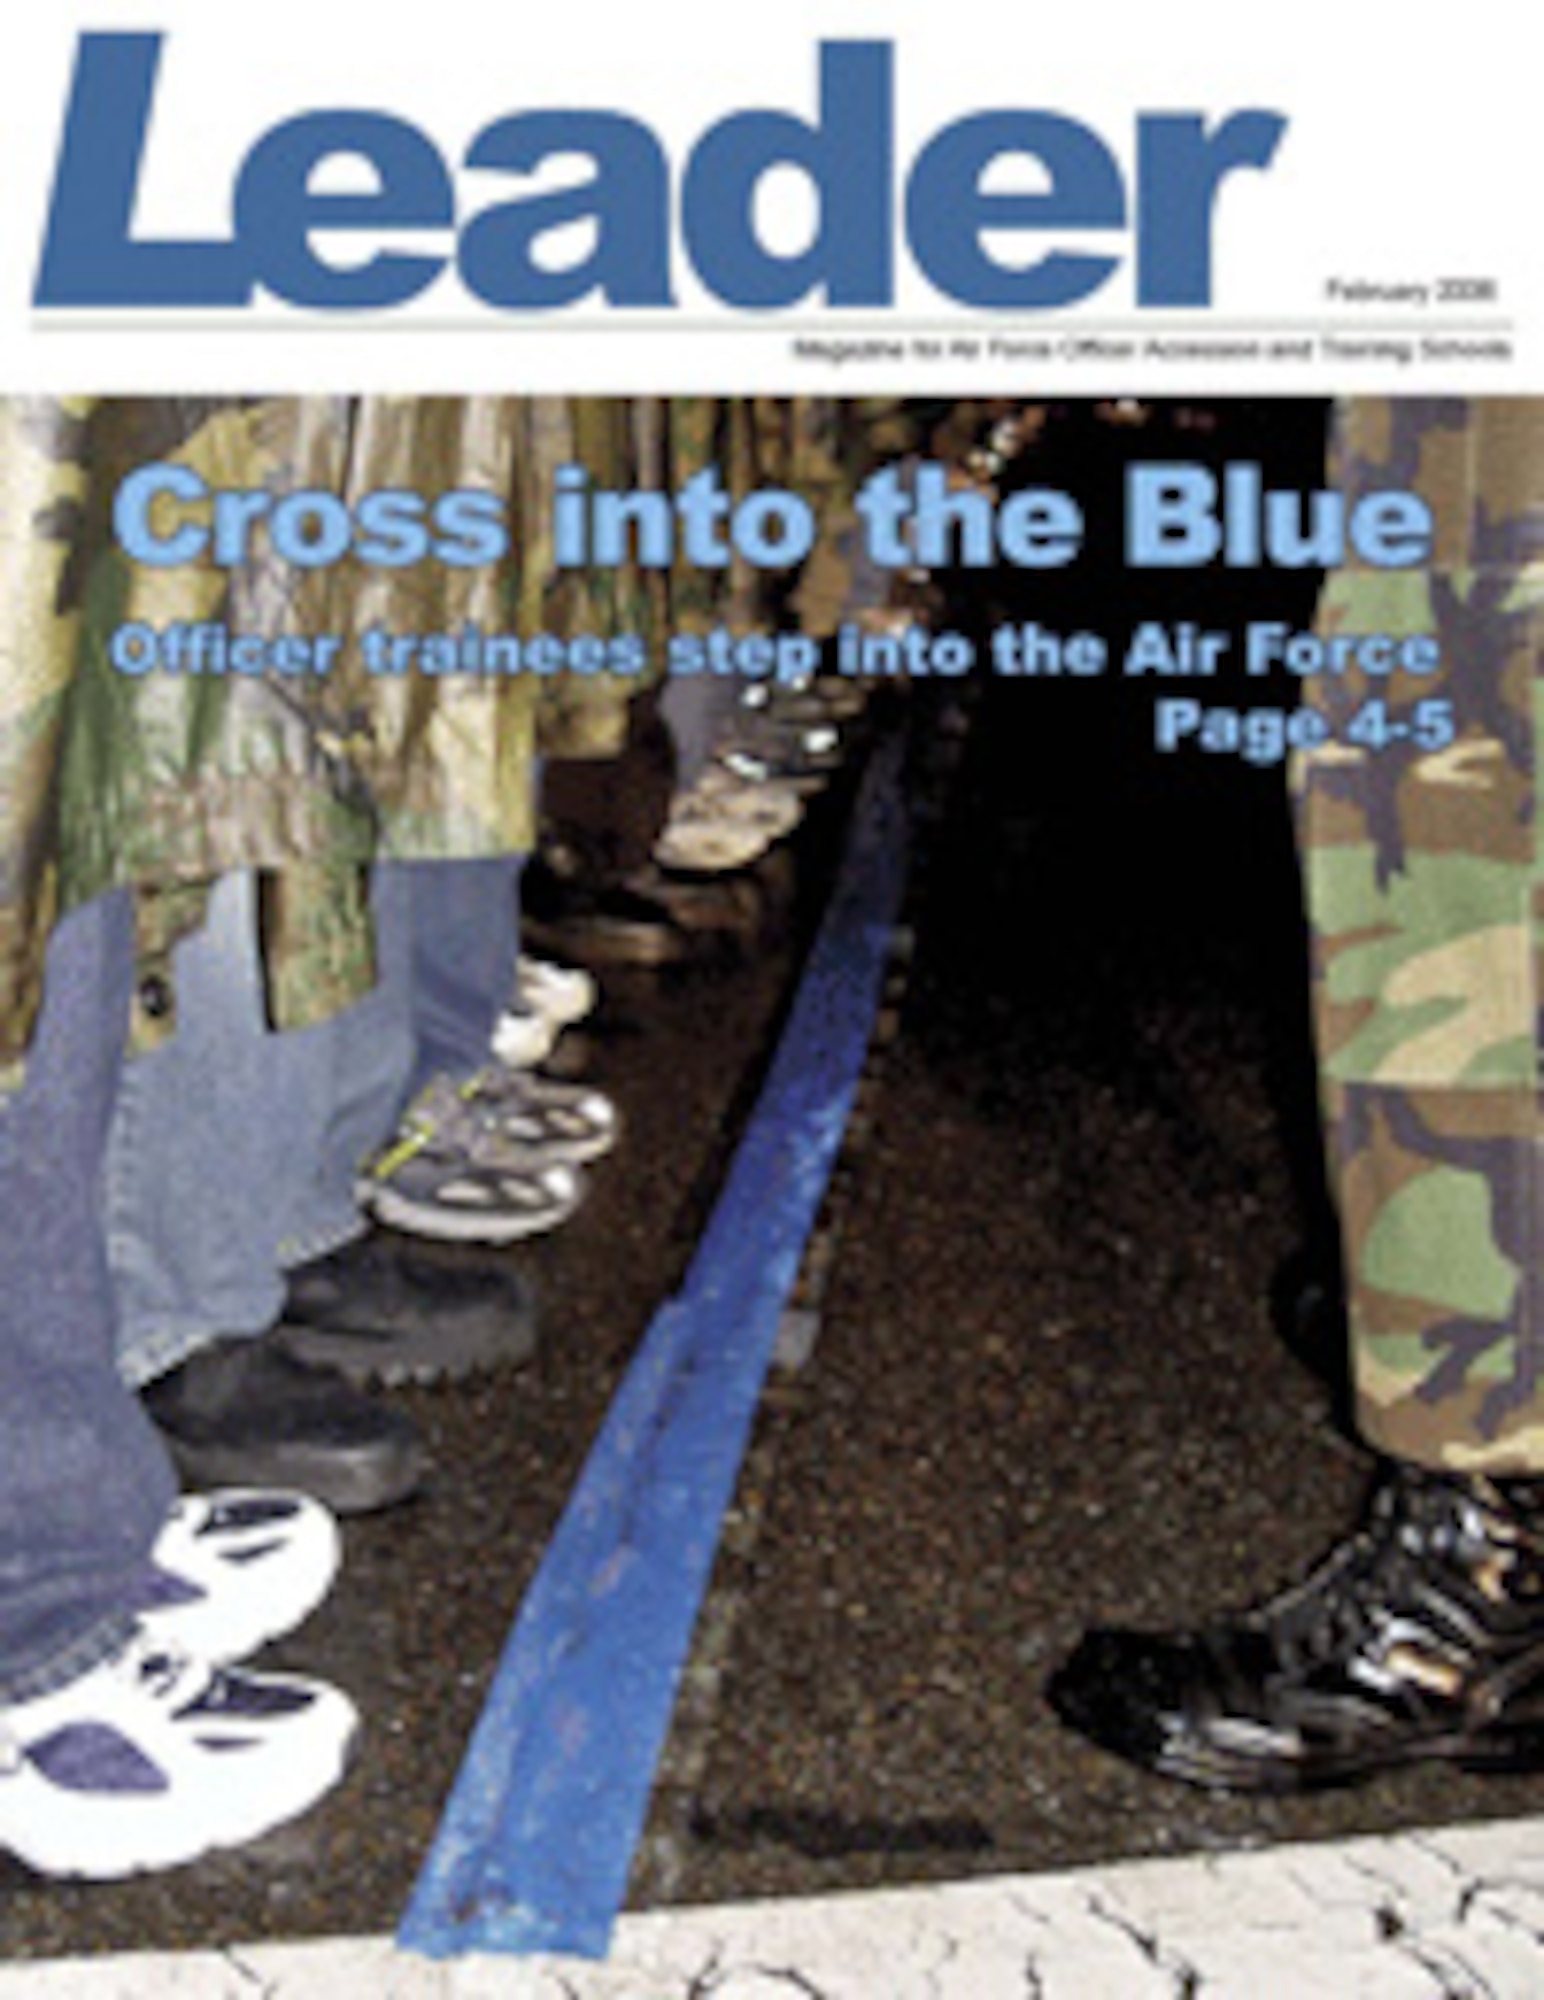 Leader Magazine Cover Image